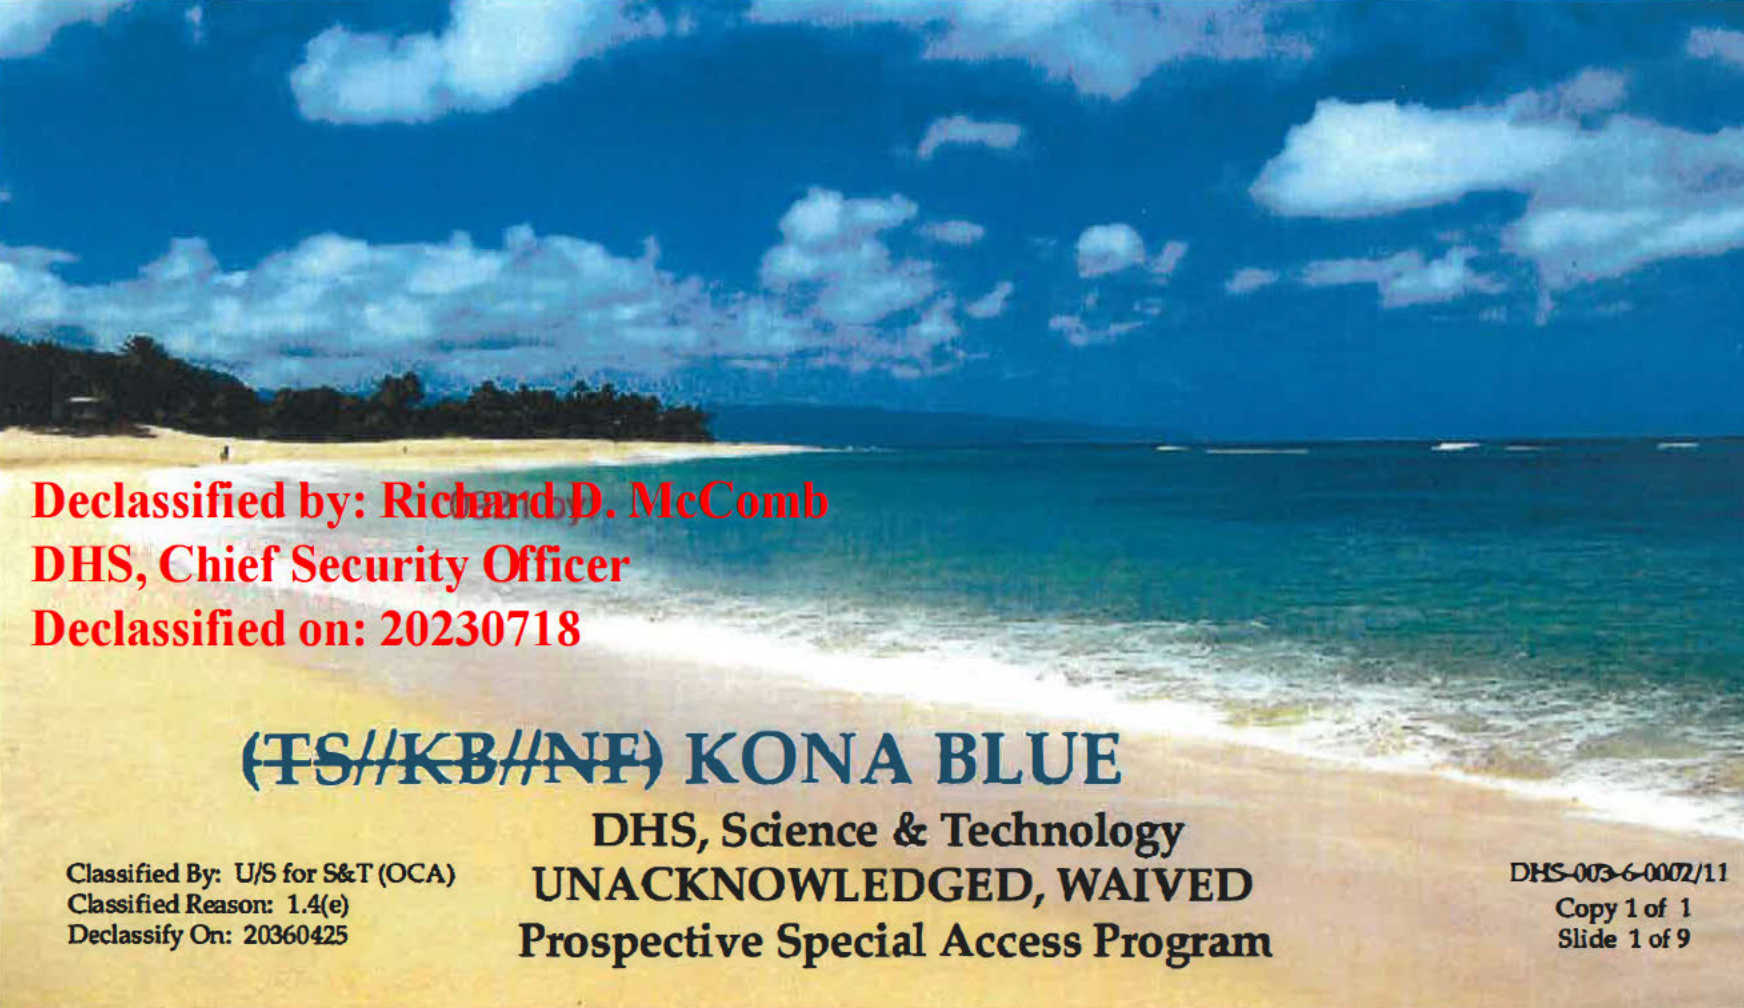 Kona Blue Summary: Recovered Advanced Technology